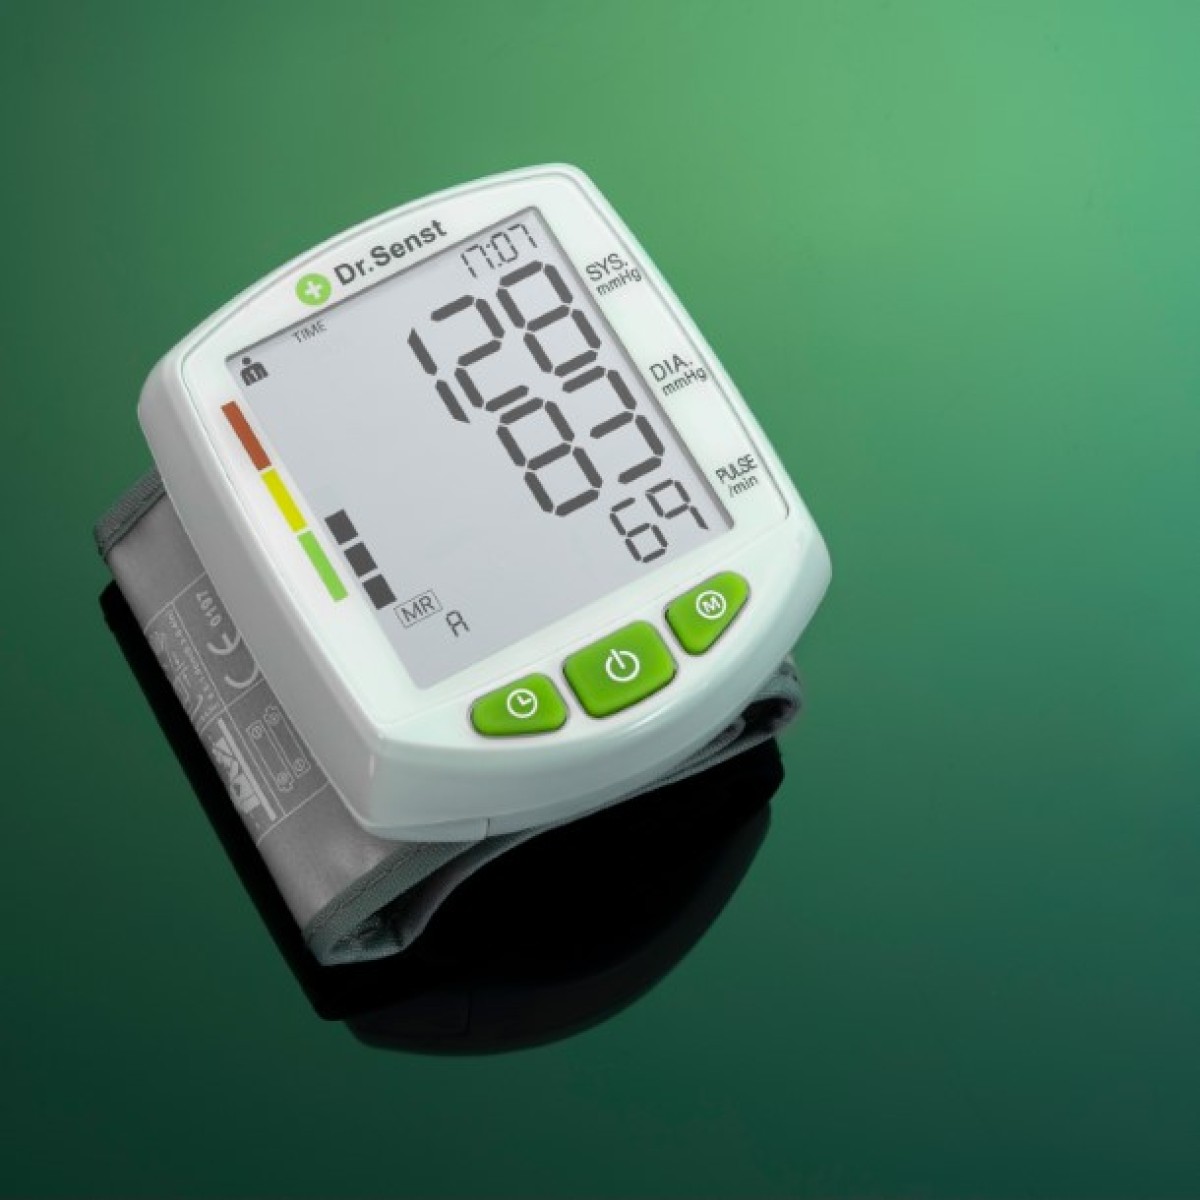 Dr. Senst BP880W Wrist blood-pressure-monitor